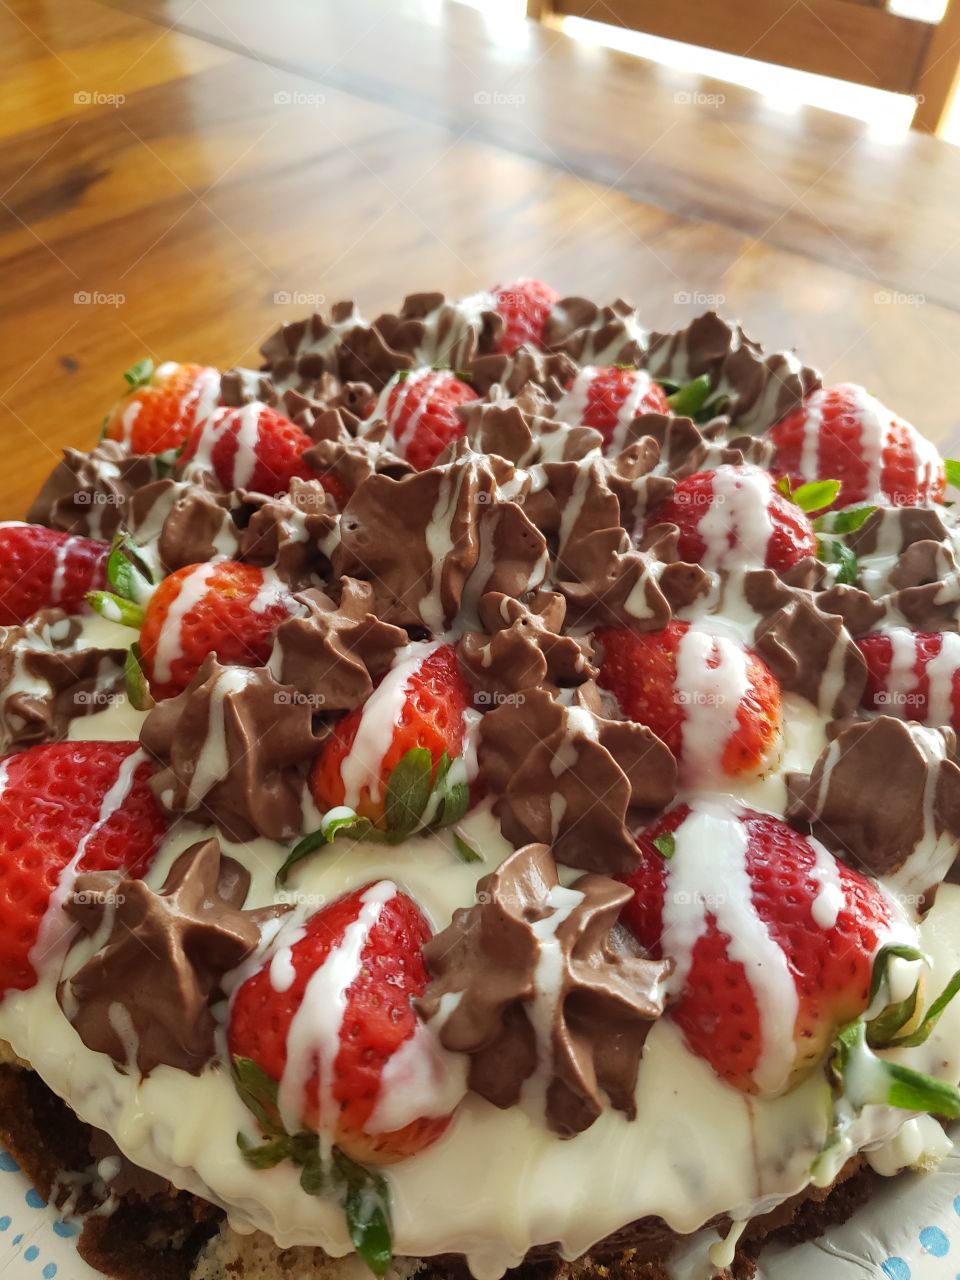 strawberry/marbel cake